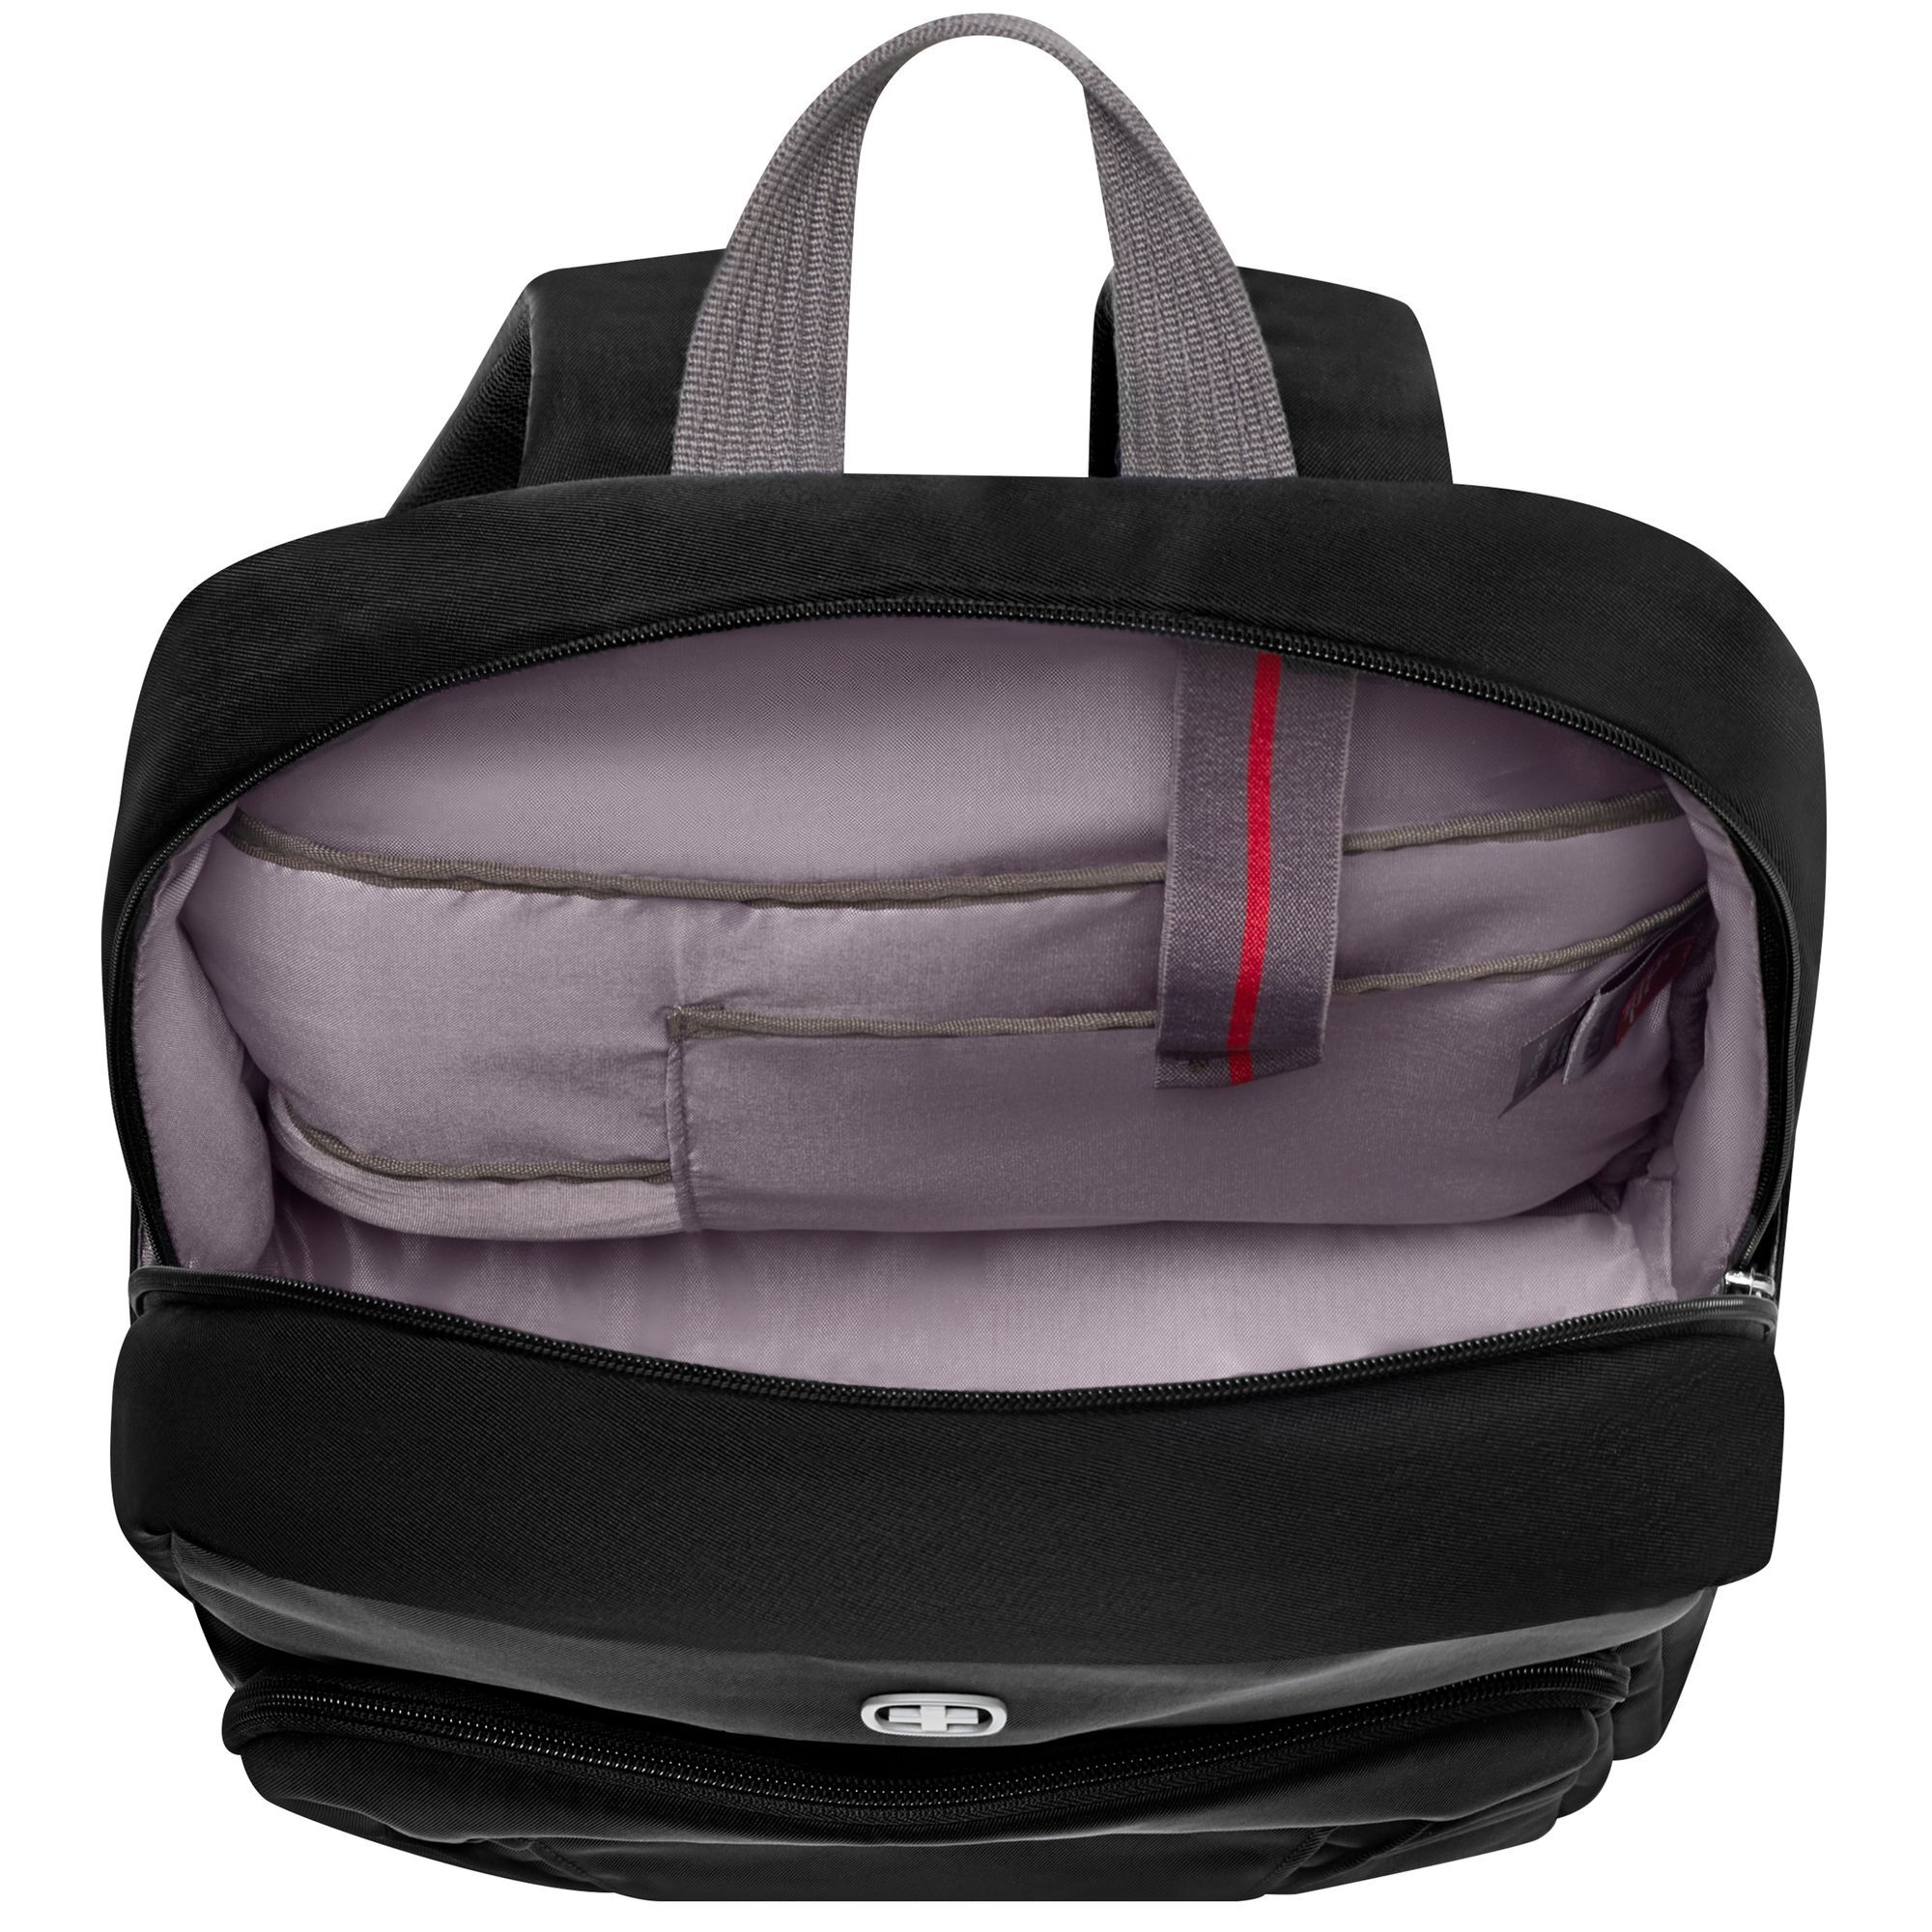 Рюкзак Wenger Motion 42 cm Laptopfach, шикарный черный рюкзак wenger crango 46 cm laptopfach цвет gravity black